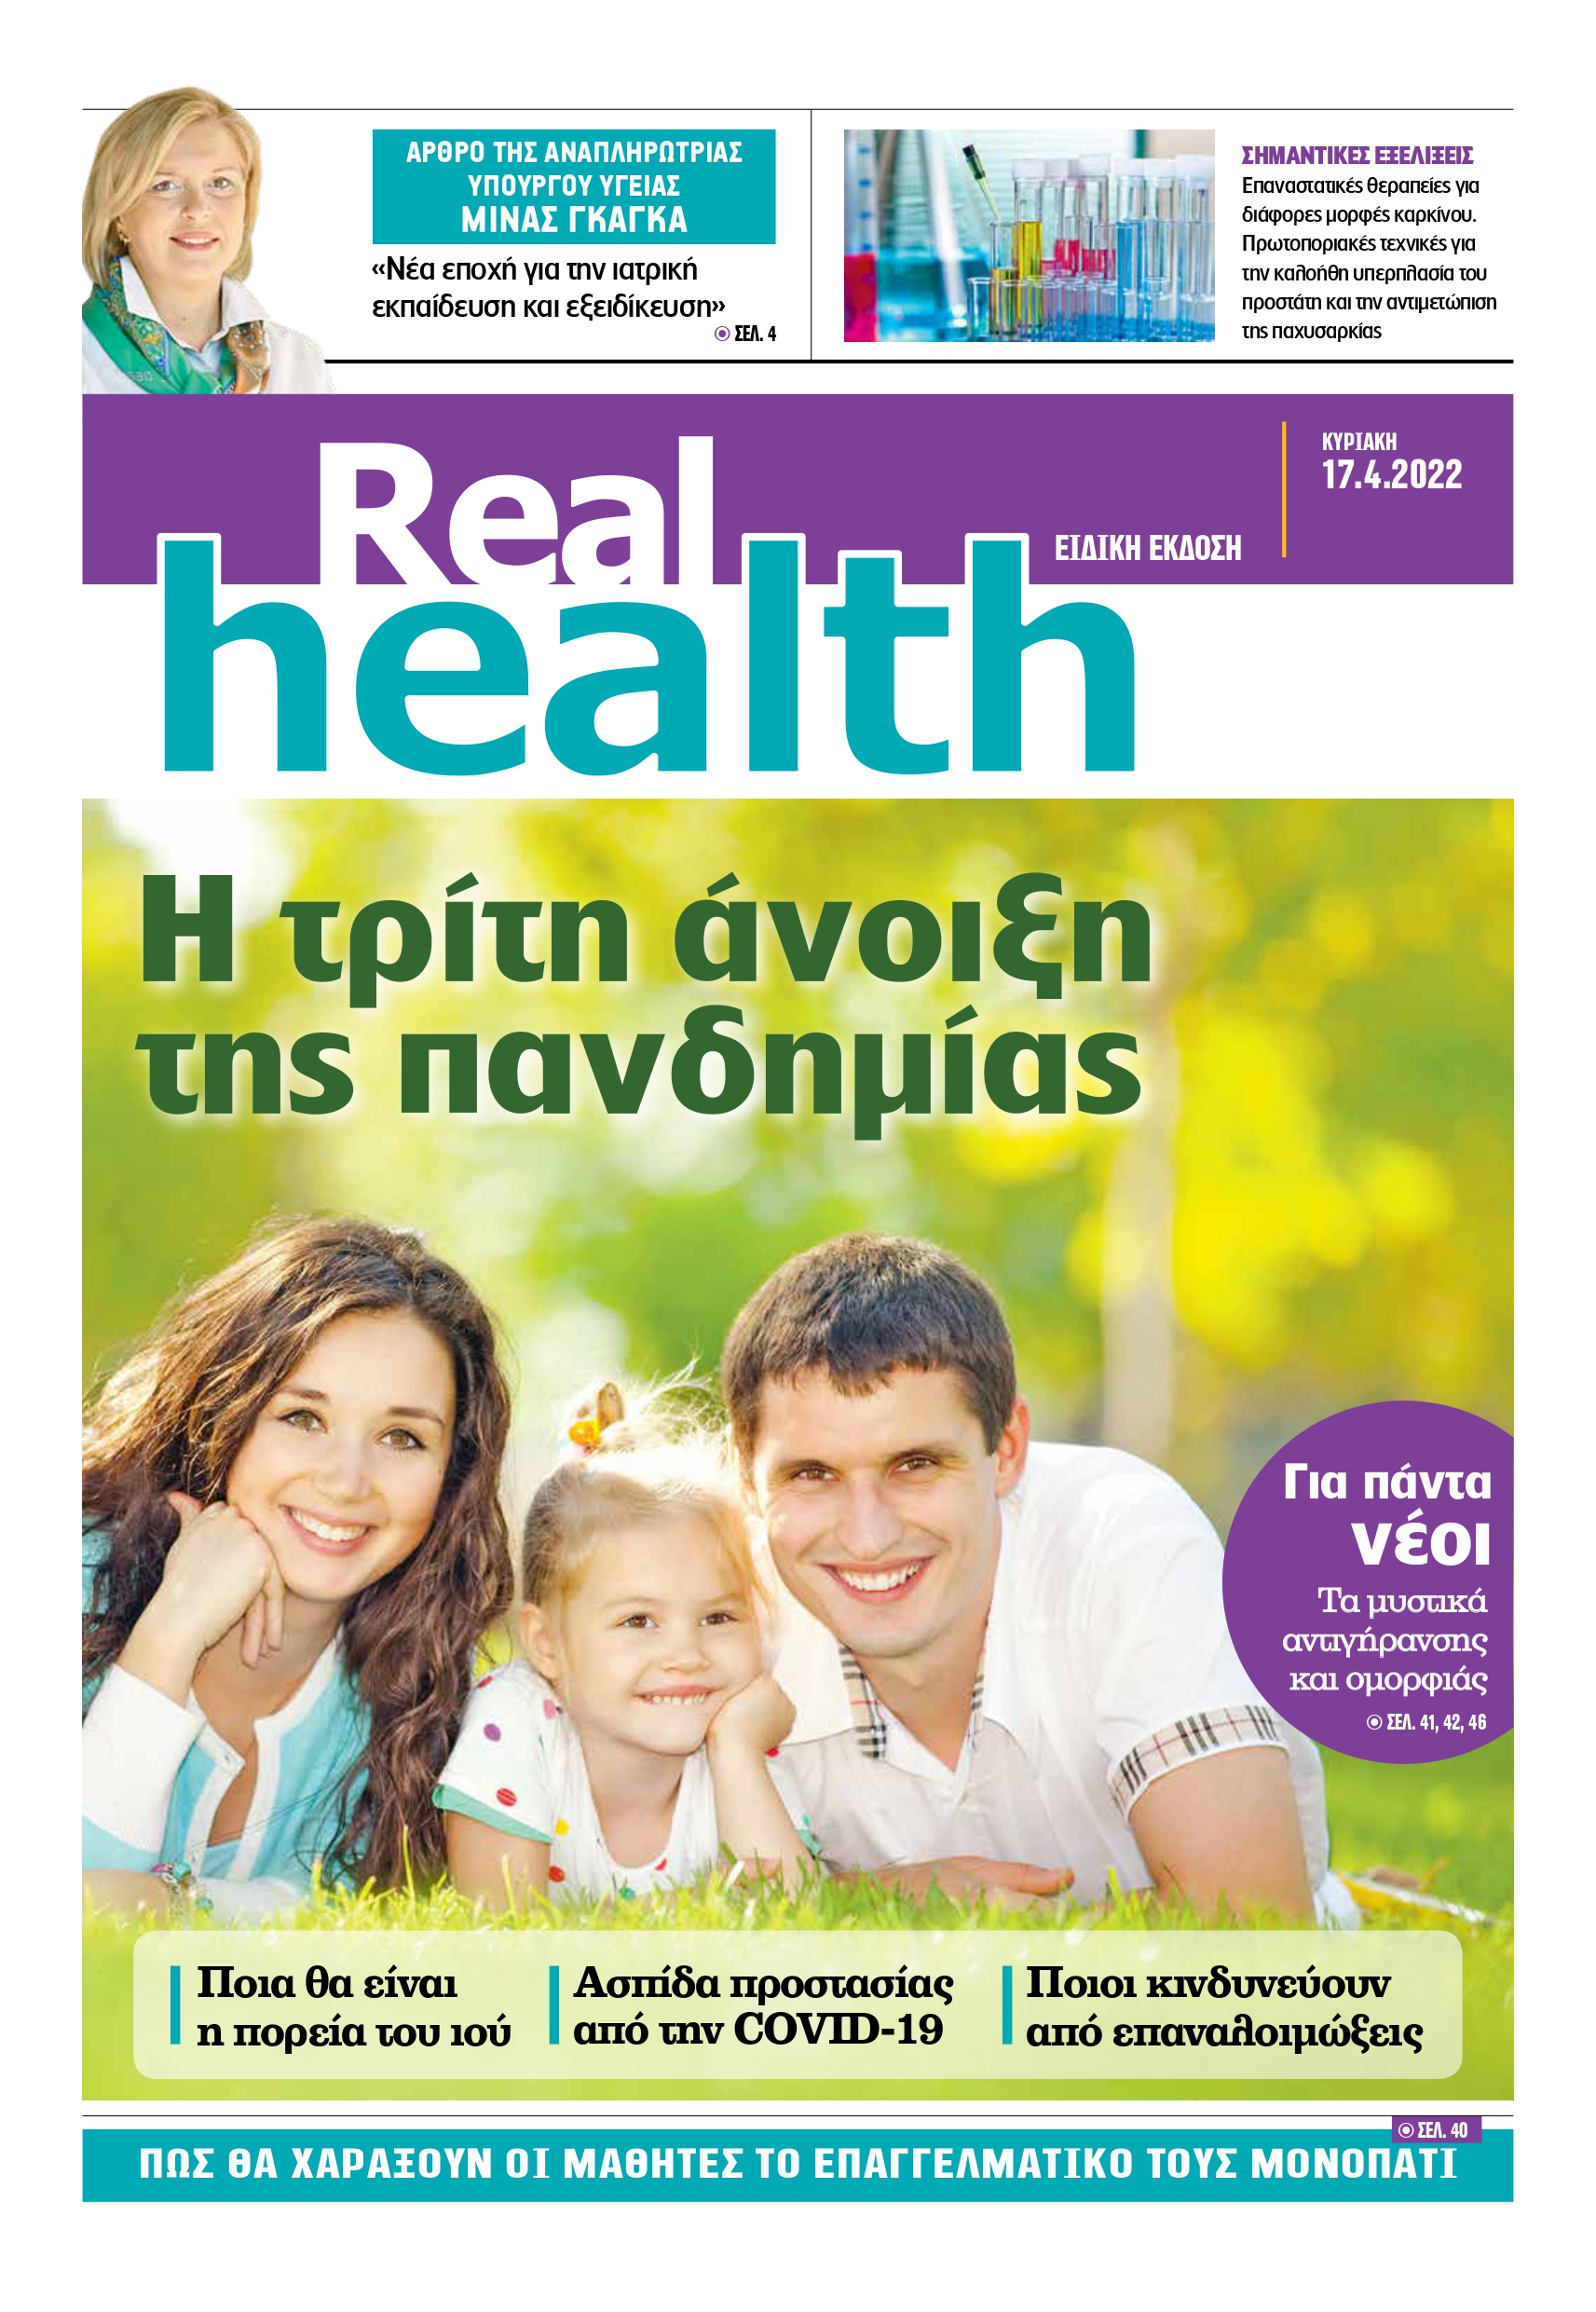 Real health